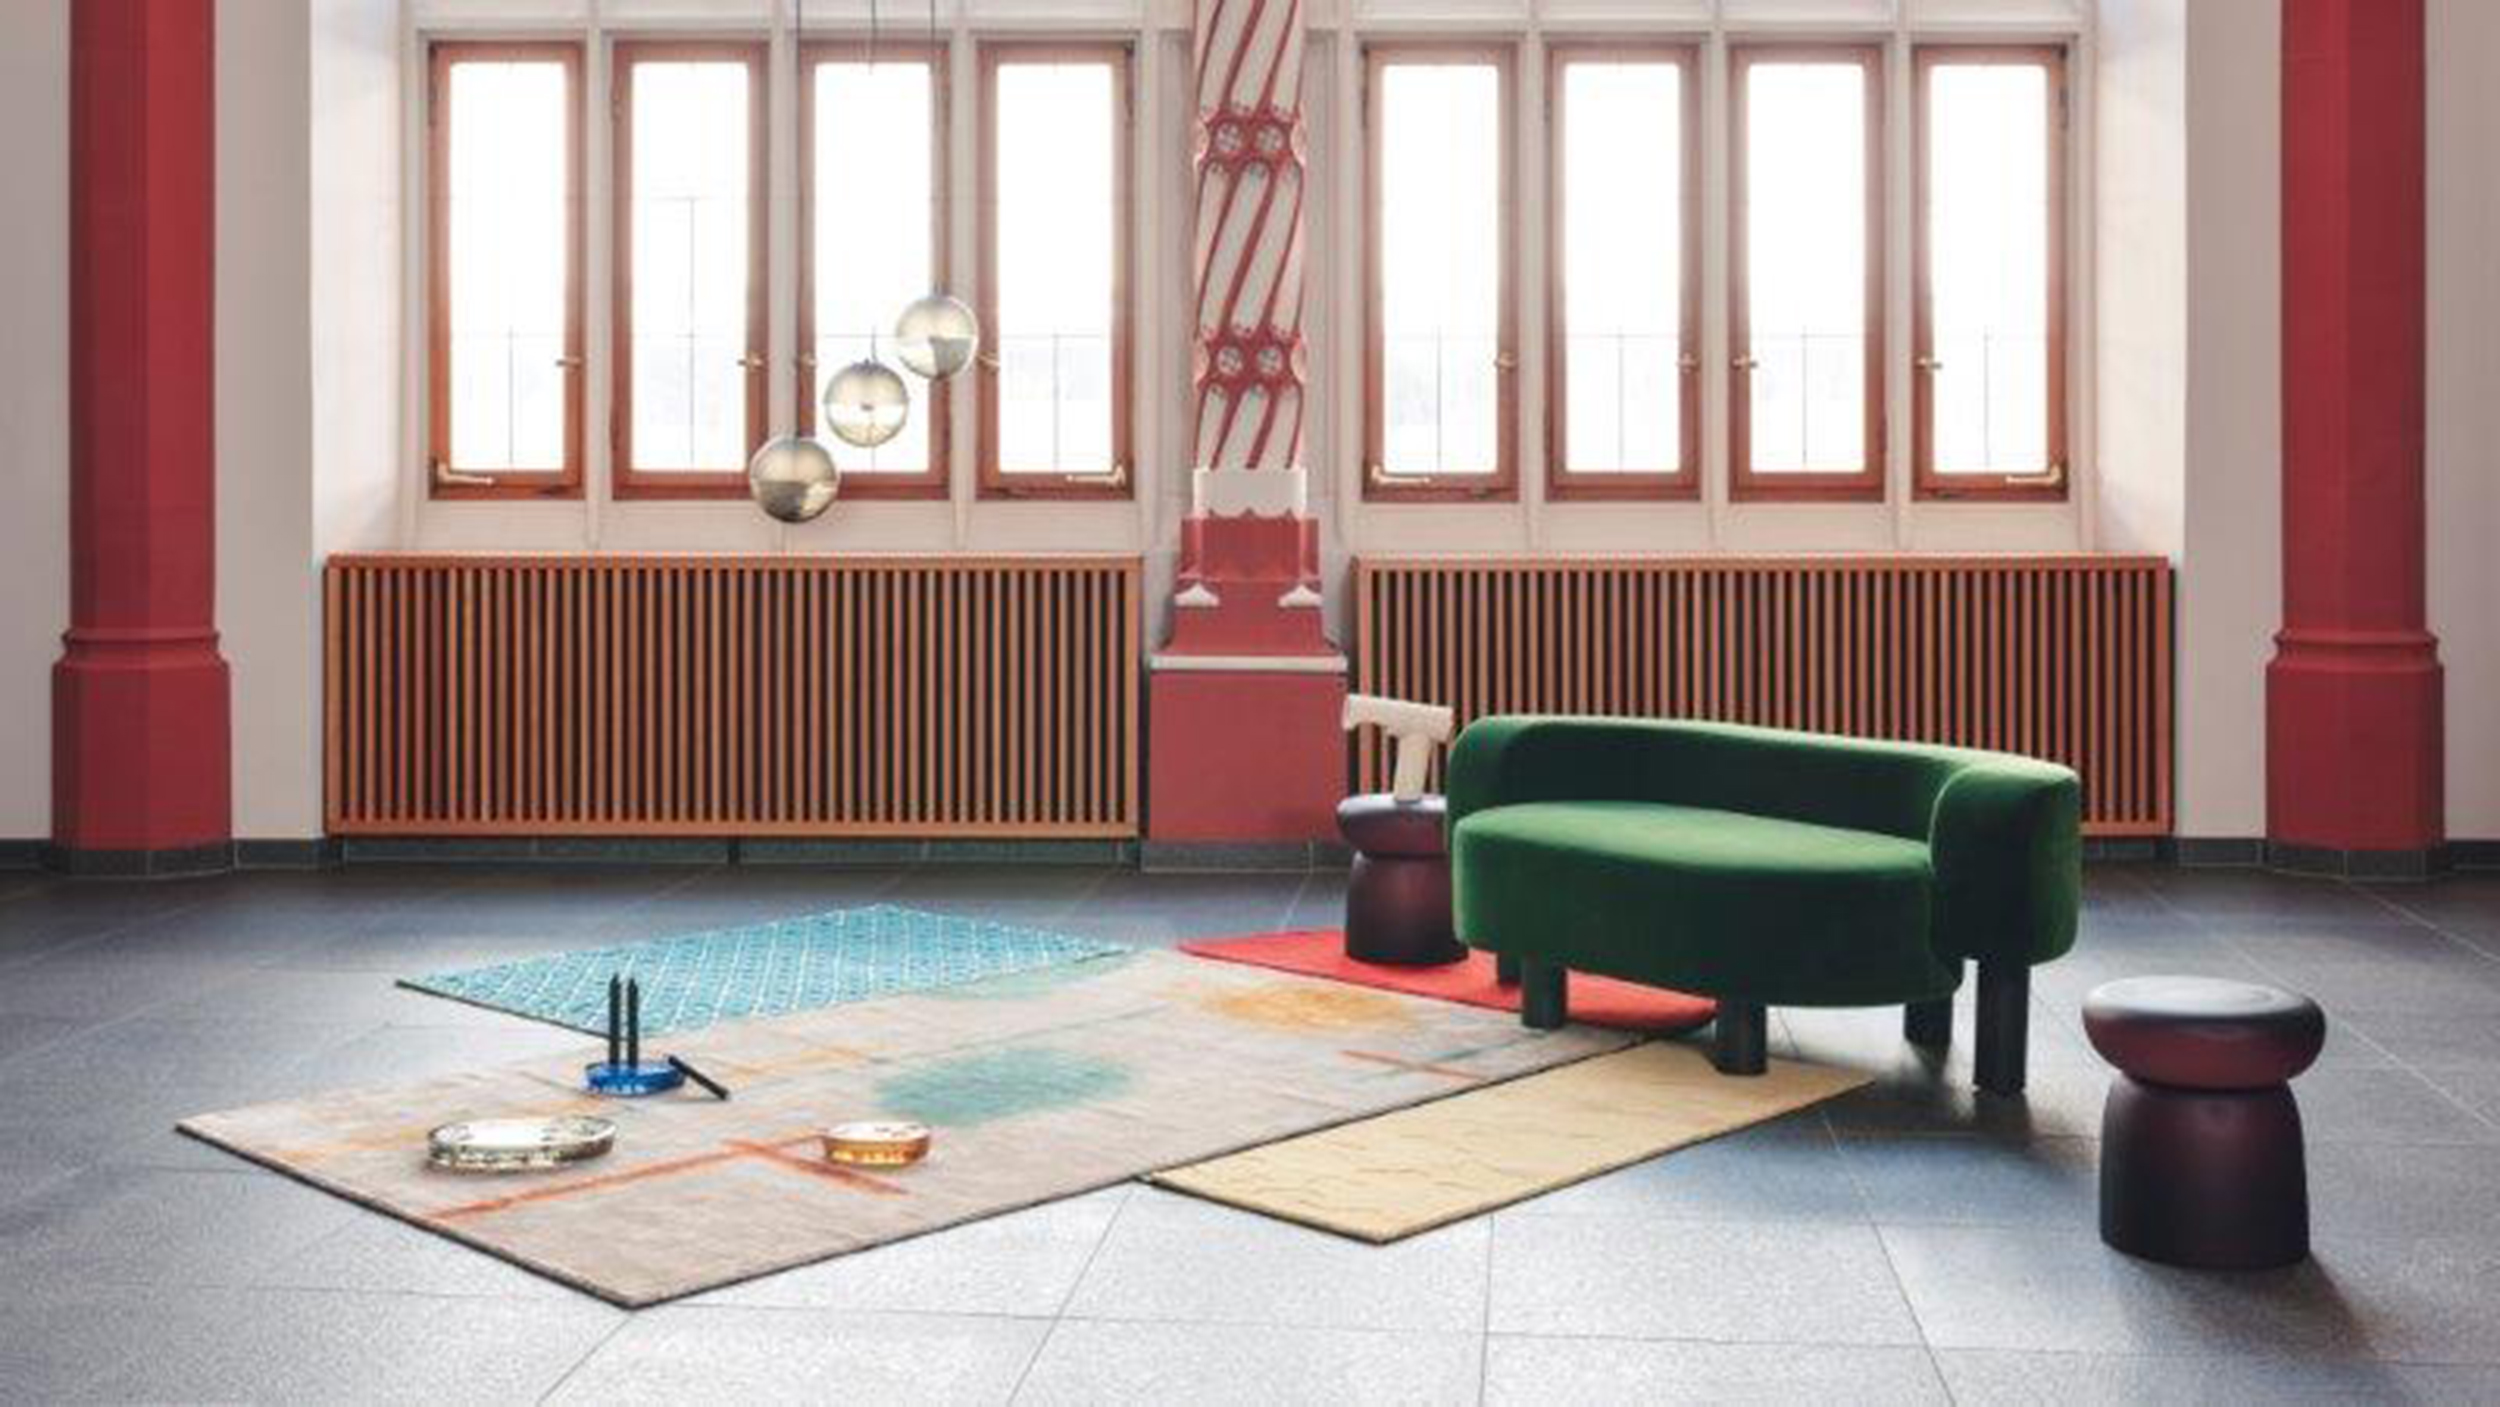 Sacha Walckhoff 與 Lacroix 合作推出的現代地毯與居家設計，以強烈色彩展現當代生活的豐富多元感。